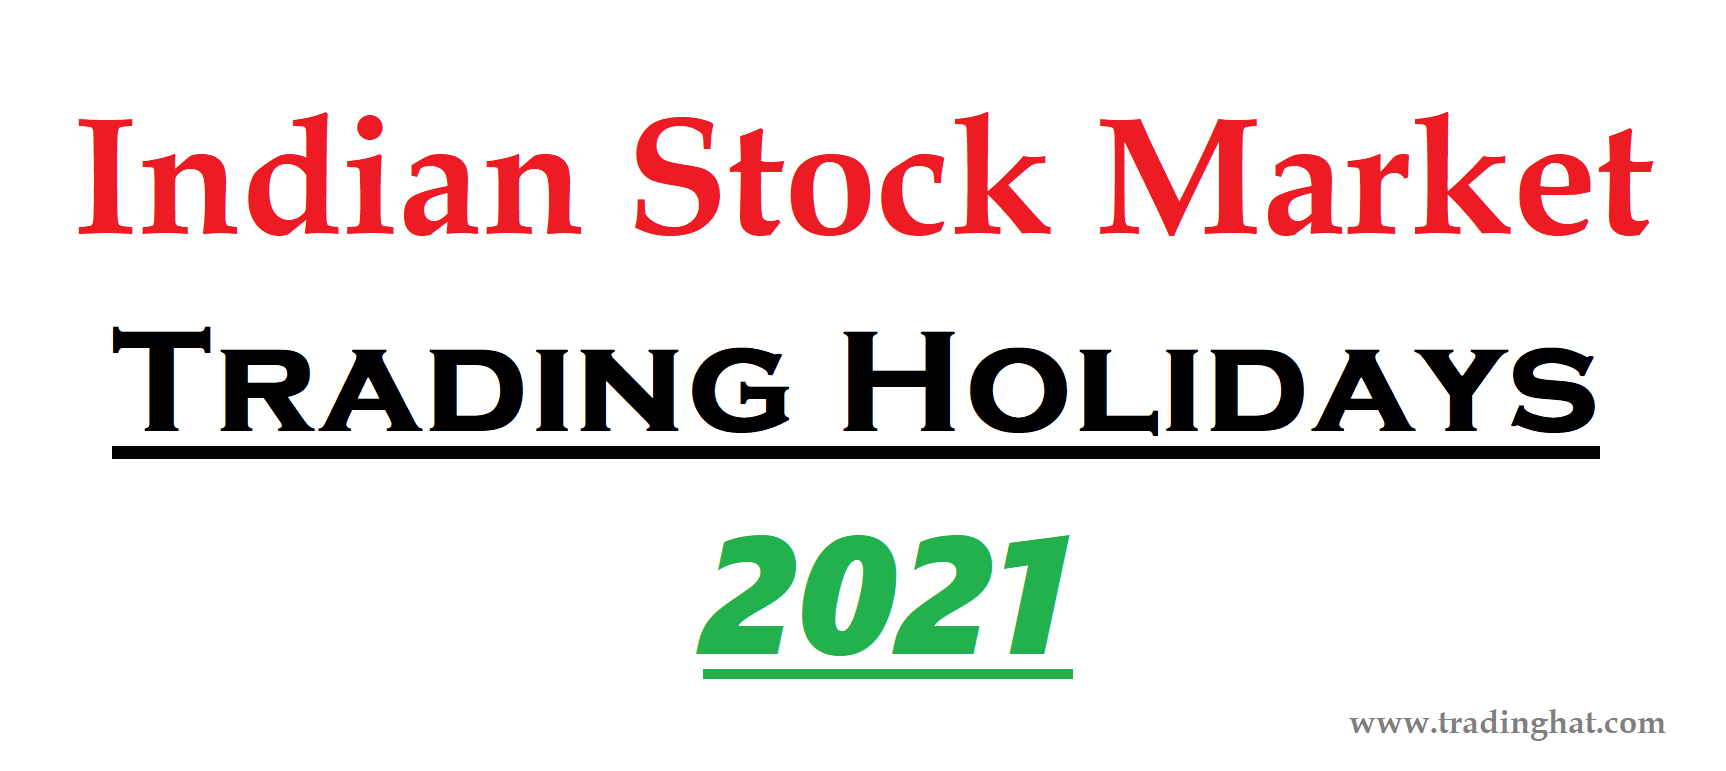 Indian Stock Market Trading Holiday 2021